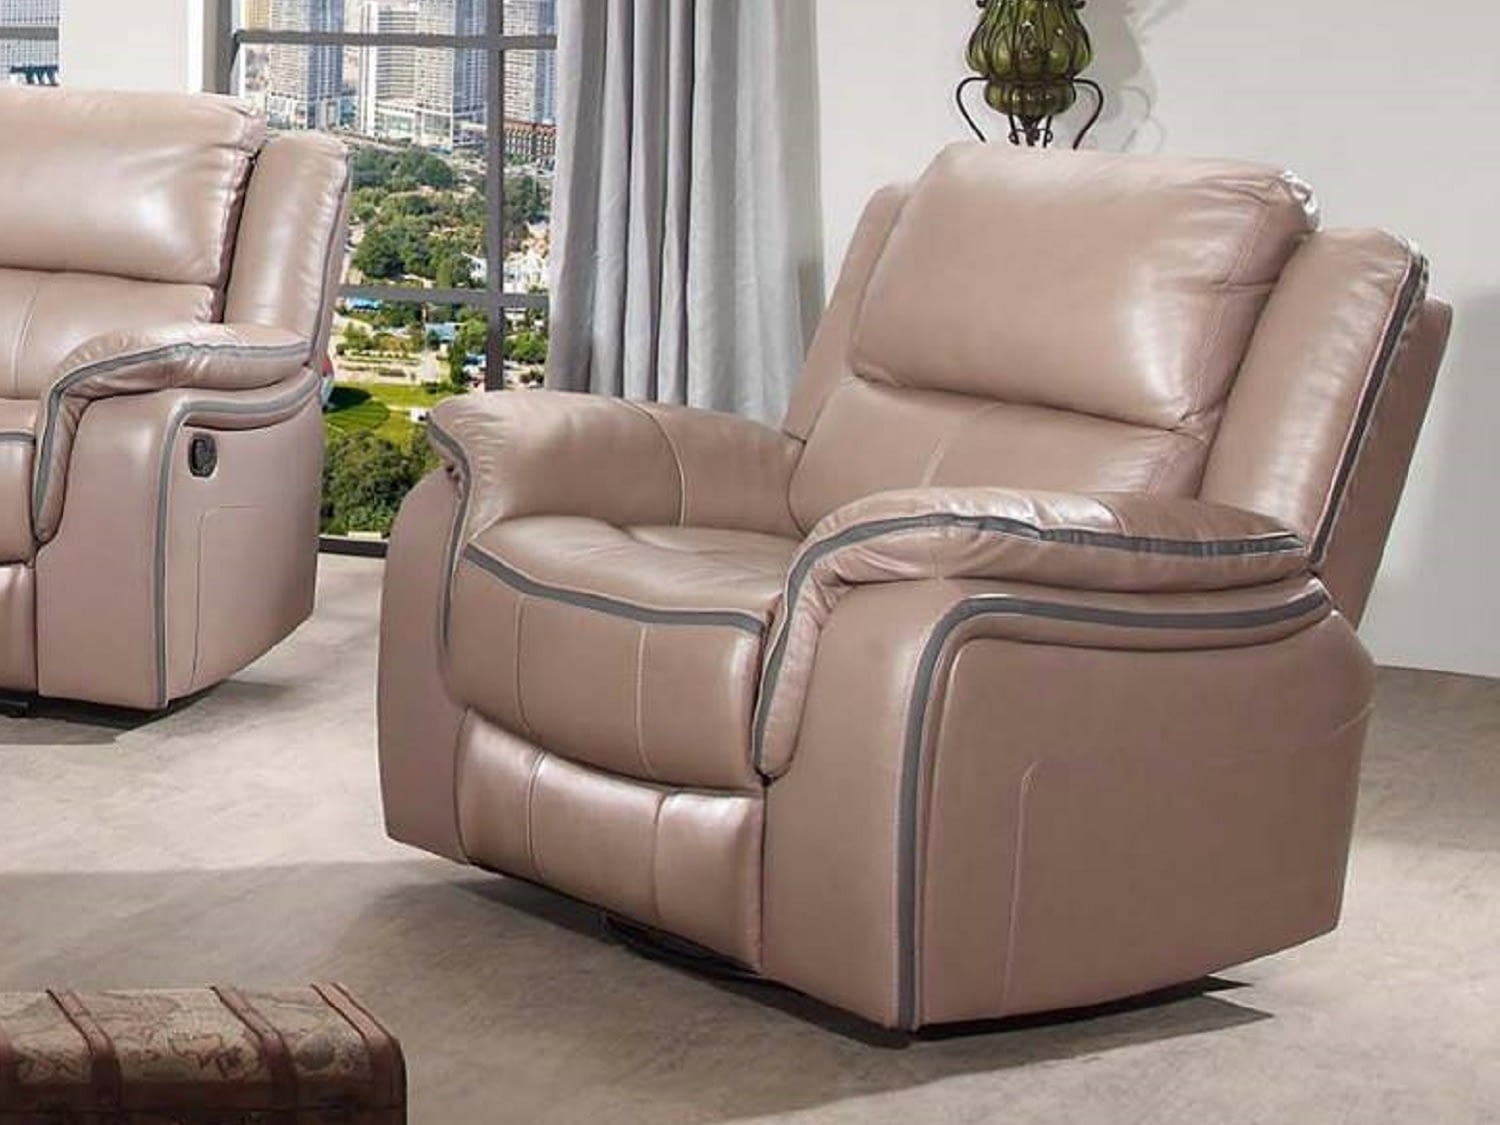 SONNA Leather Glider Recliner Chair